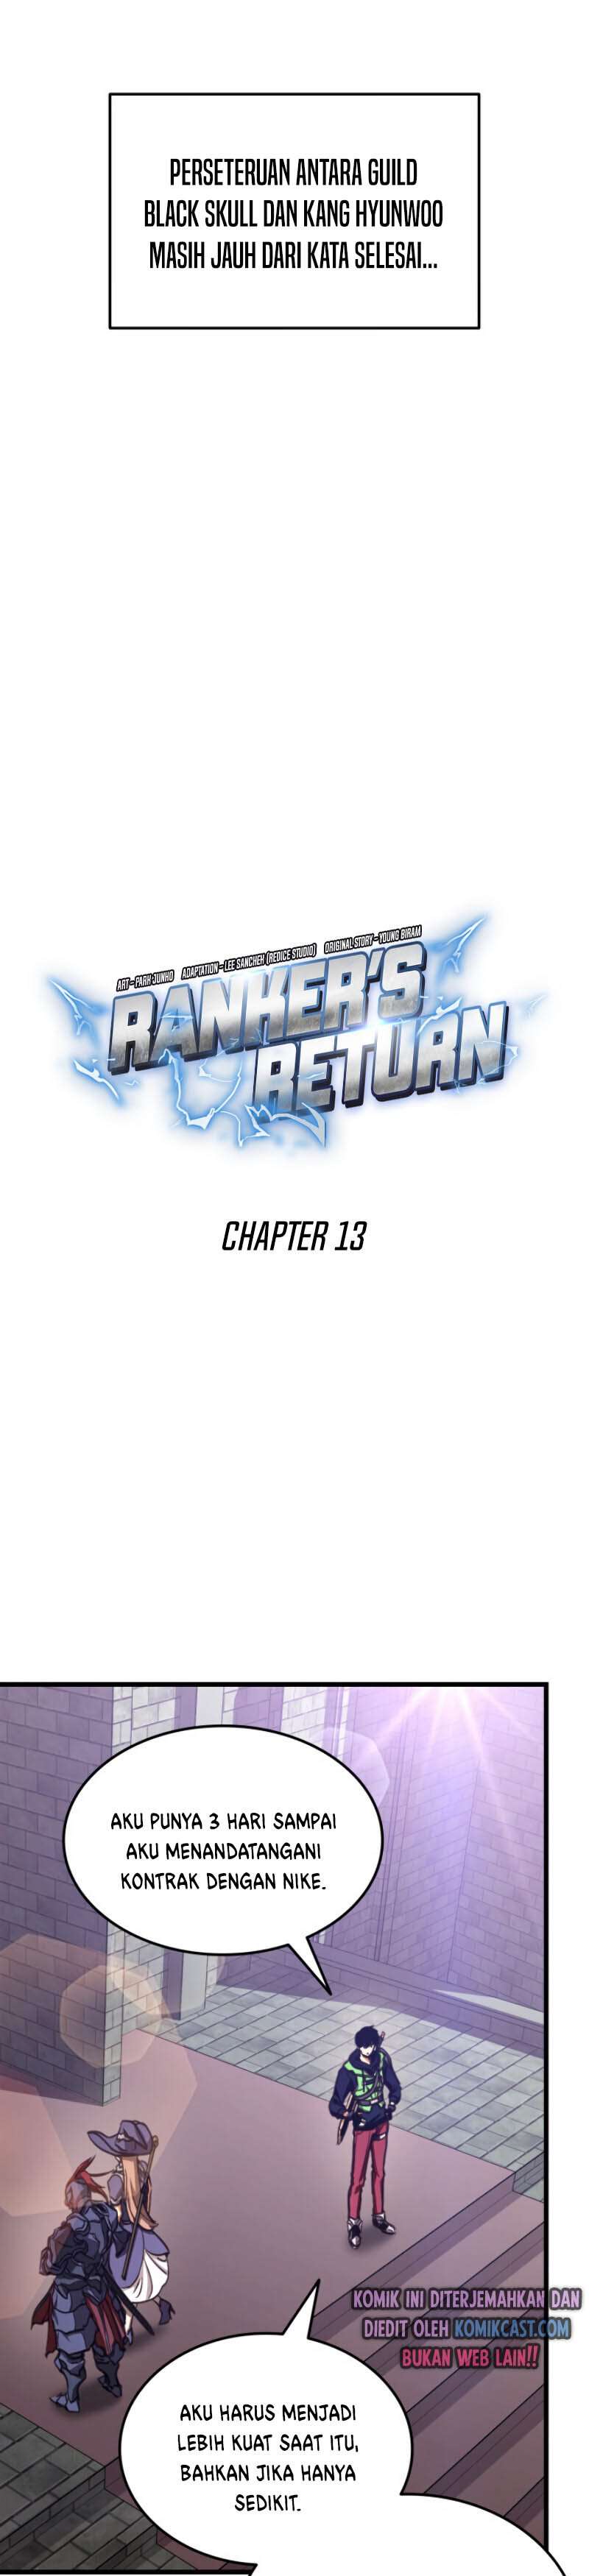 Ranker’s Return (Remake) Chapter 13